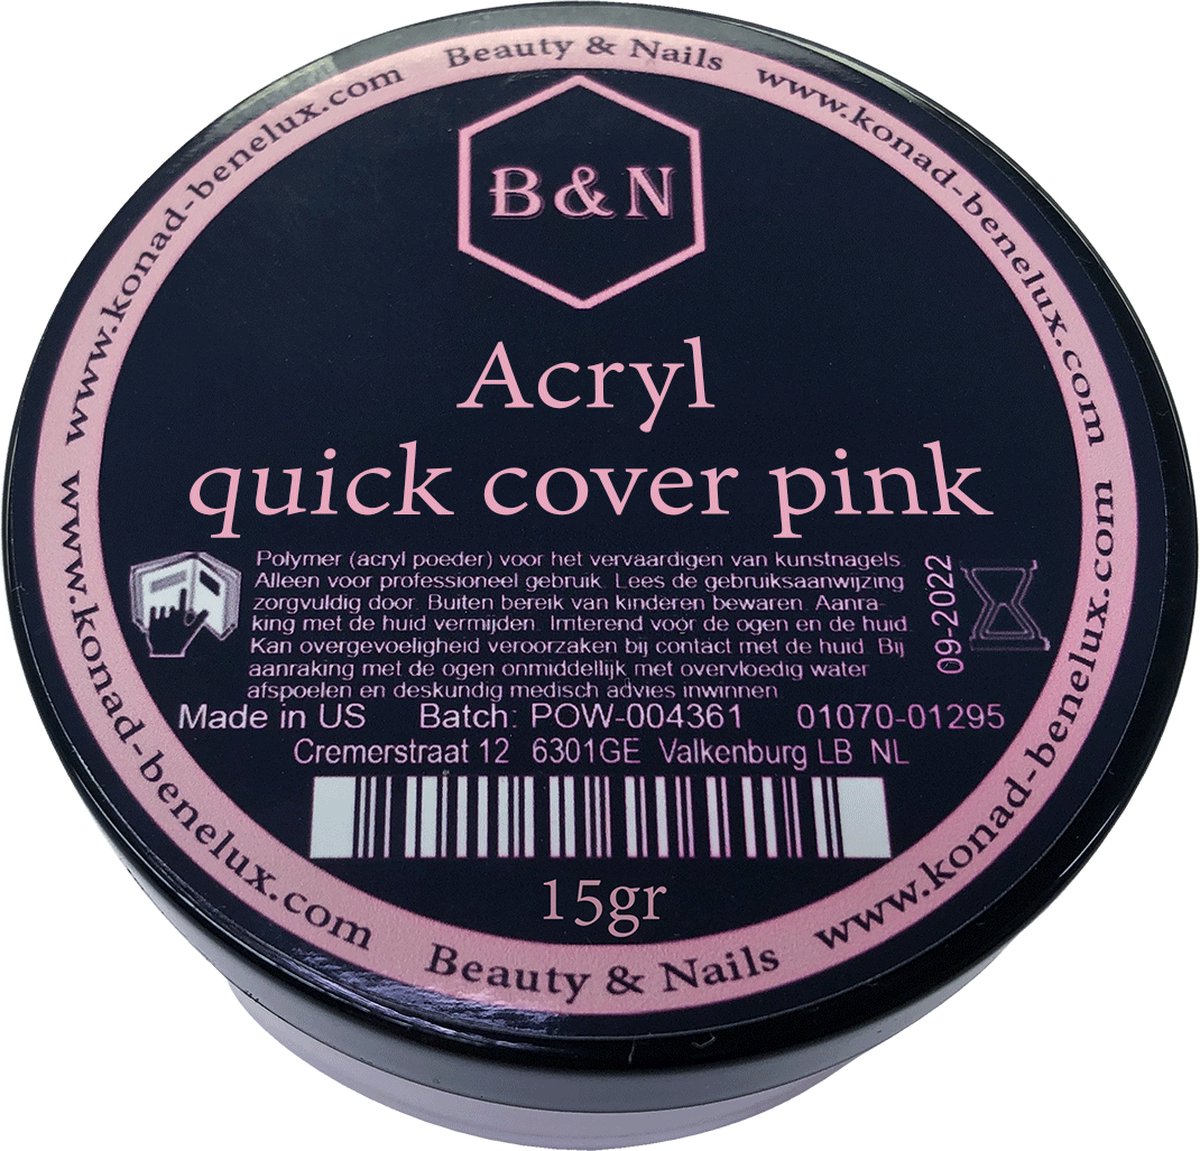 Acryl - quick cover pink - 15 gr | B&N - acrylpoeder - VEGAN - acrylpoeder